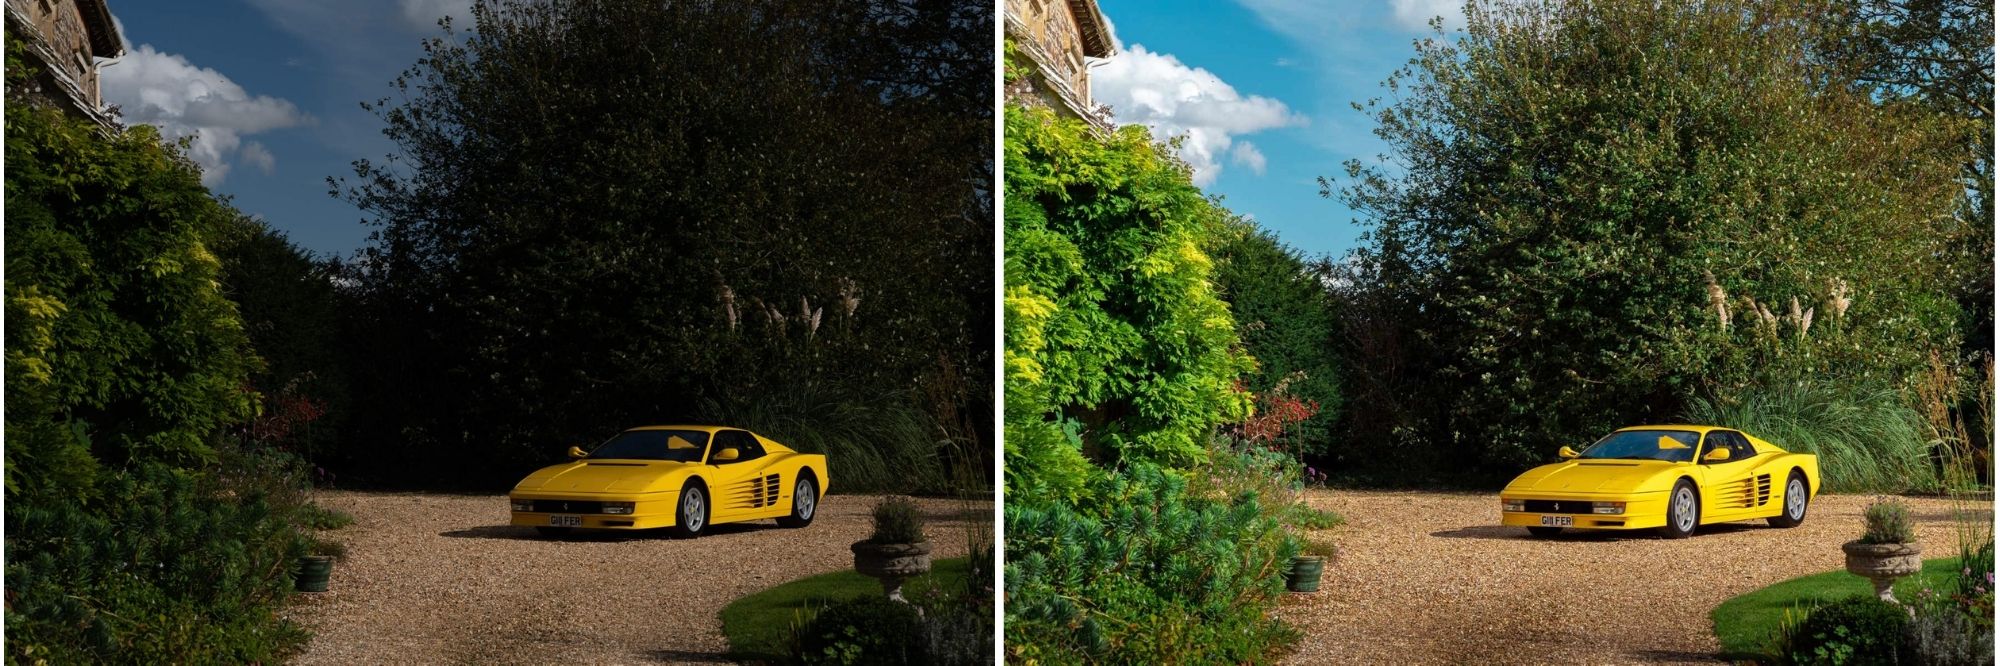 Yellow Ferrari Testarossa parked at country house edited to brighten